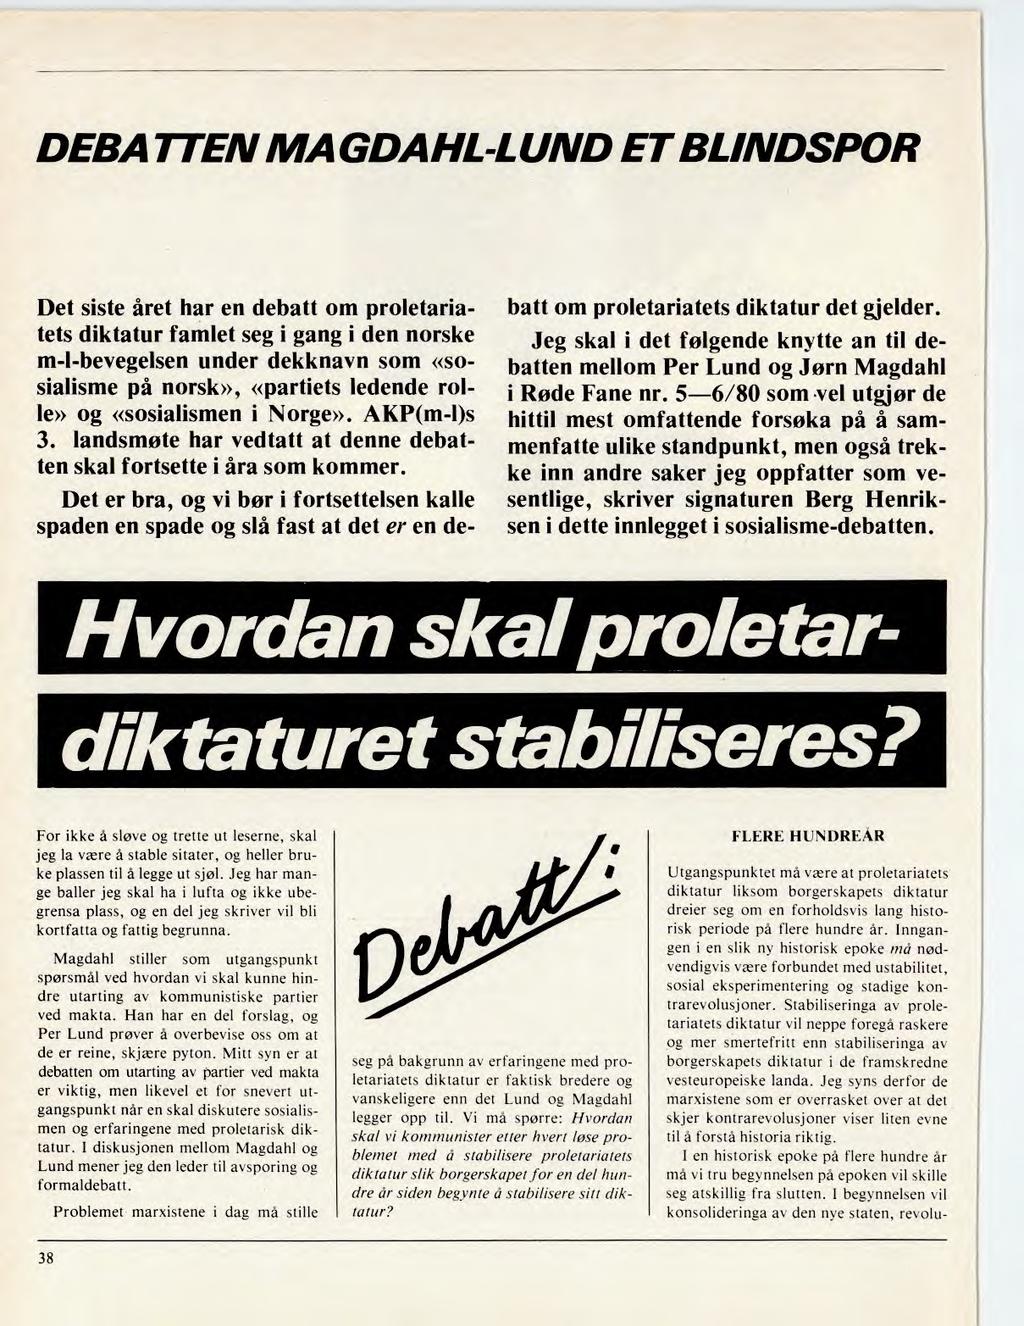 DEBATTEN MAGDAHL-LUND ET BLINDSPOR Det siste året har en debatt om proletariatets diktatur famlet seg i gang i den norske m-l-bevegelsen under dekknavn som «sosialisme på norsk», «partiets ledende